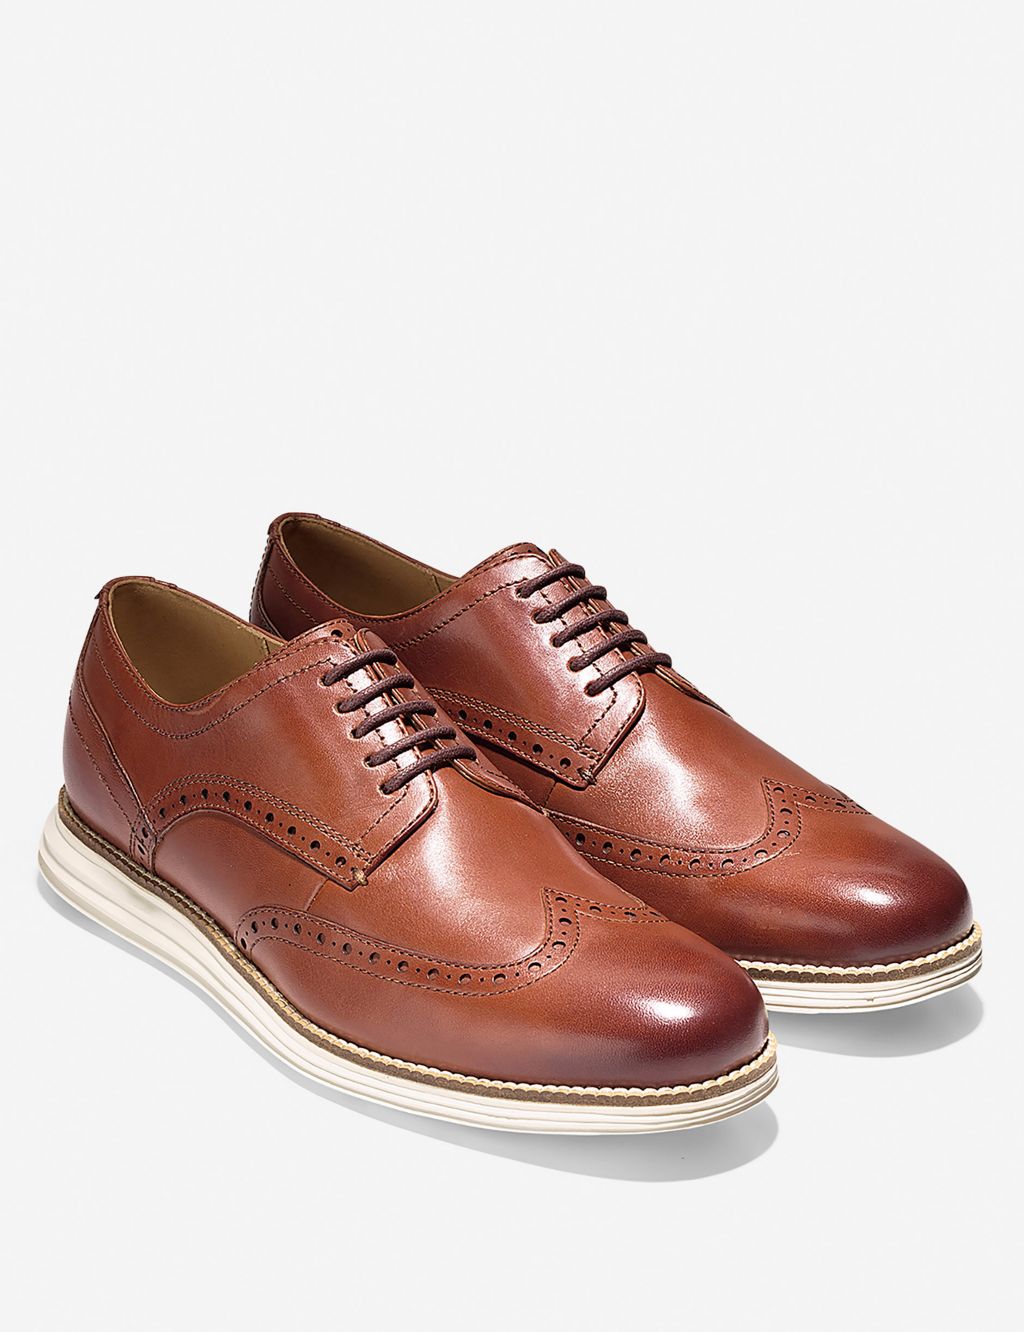 Originalgrand Leather Oxford Shoes image 2